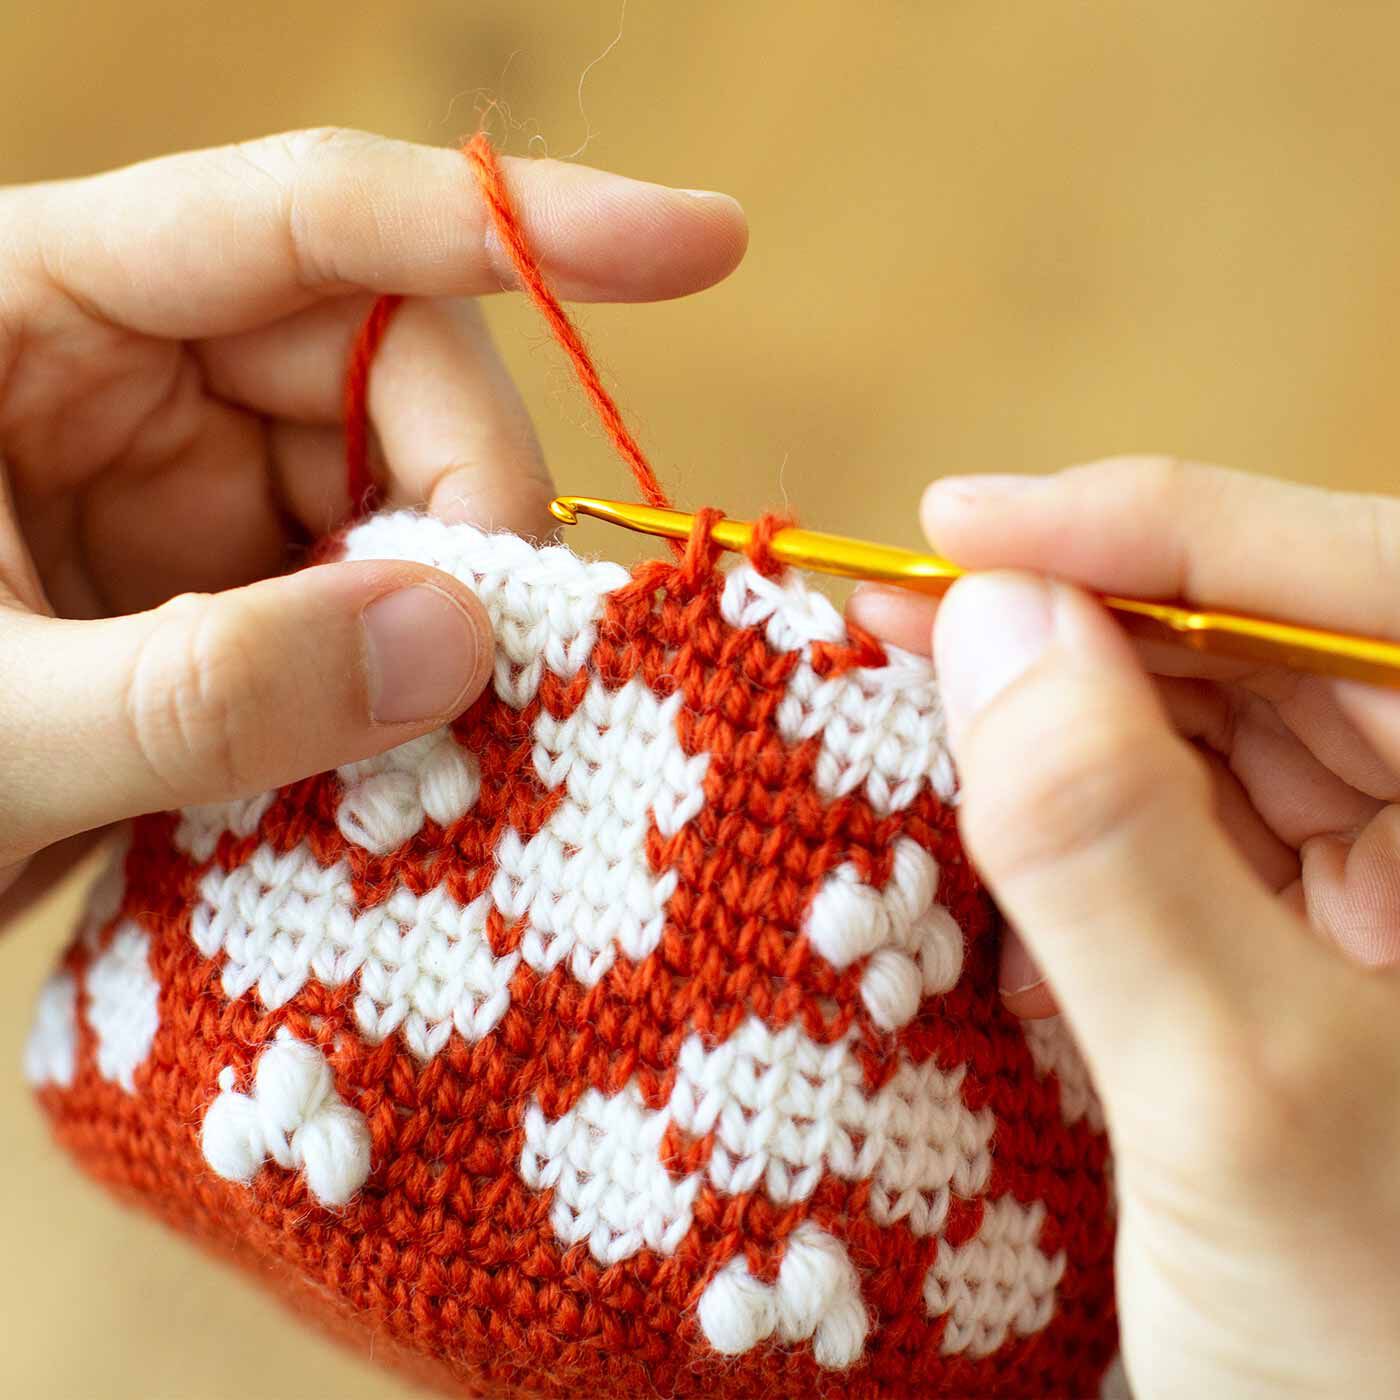 Couturier|北欧模様がポップでかわいい かぎ針編みポーチの会|メリヤスこま編みは前段のこま編みの足を拾って編むことで、棒針のメリヤス編みのような編み地に。編み地に強度があって伸びにくいので、作ったアイテムは気兼ねなくふだん使いできます。